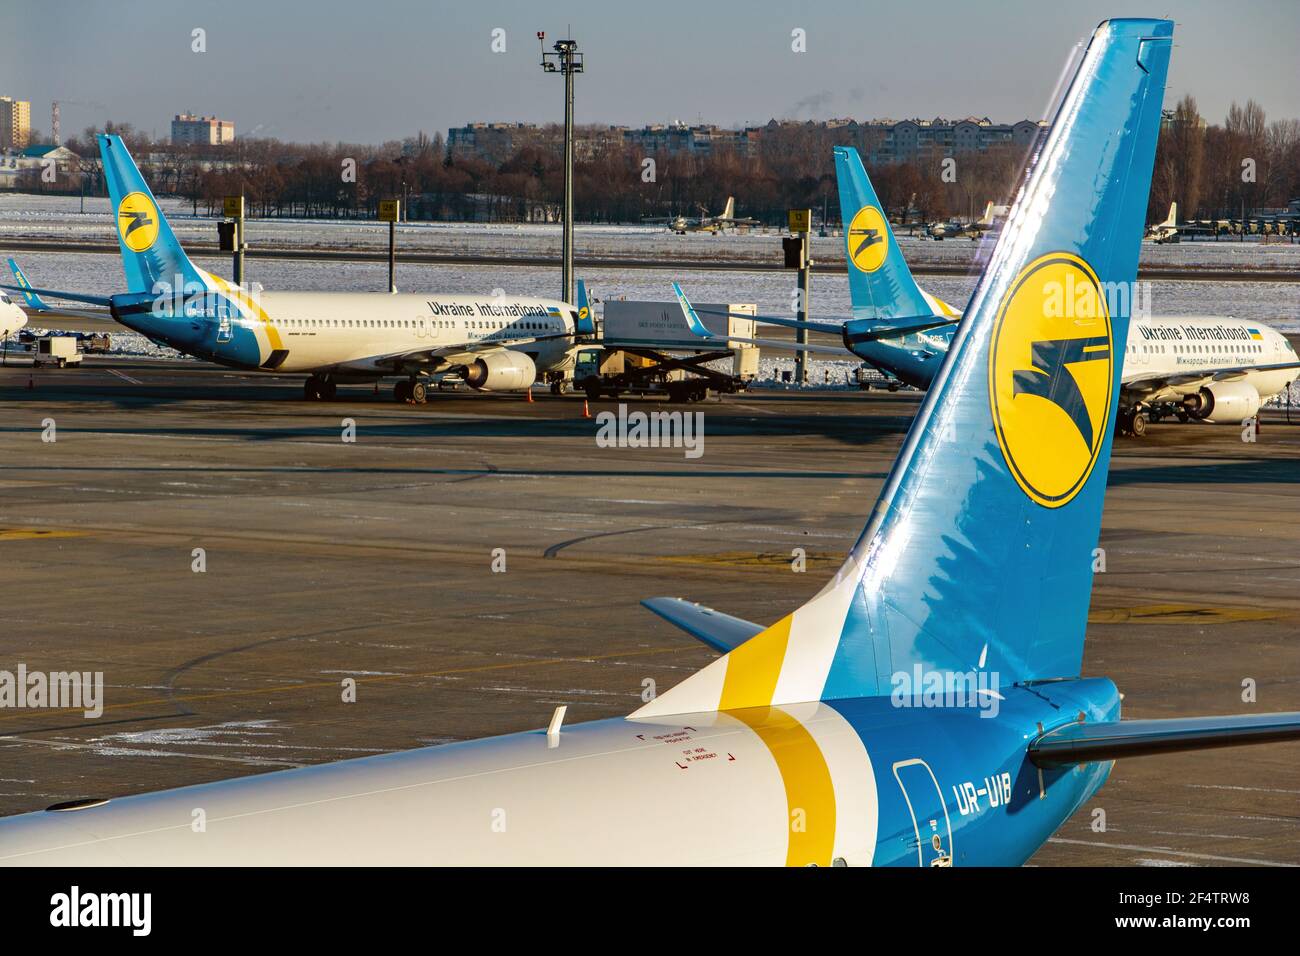 KIEV, UKRAINE, NOV 28 2018, Airplane Ukrainian Airlines stands on a runway Stock Photo